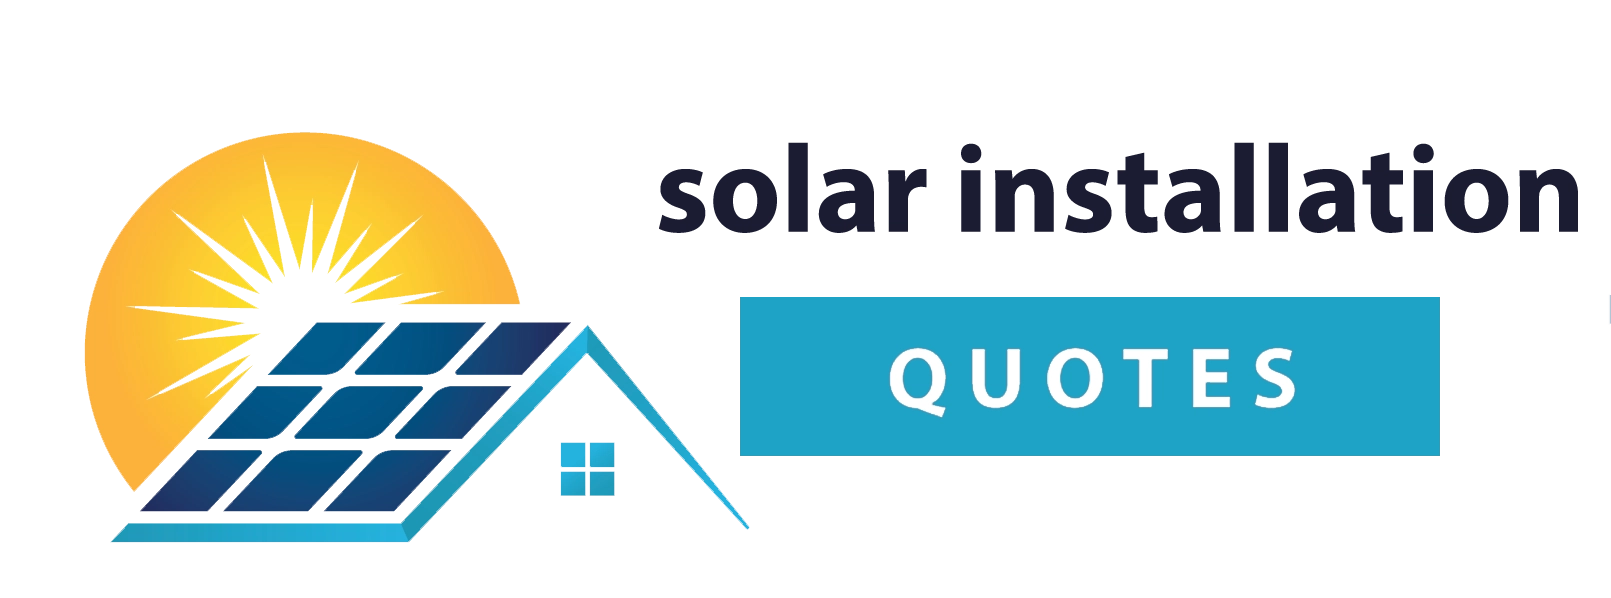 The Solar Store LLC Logo